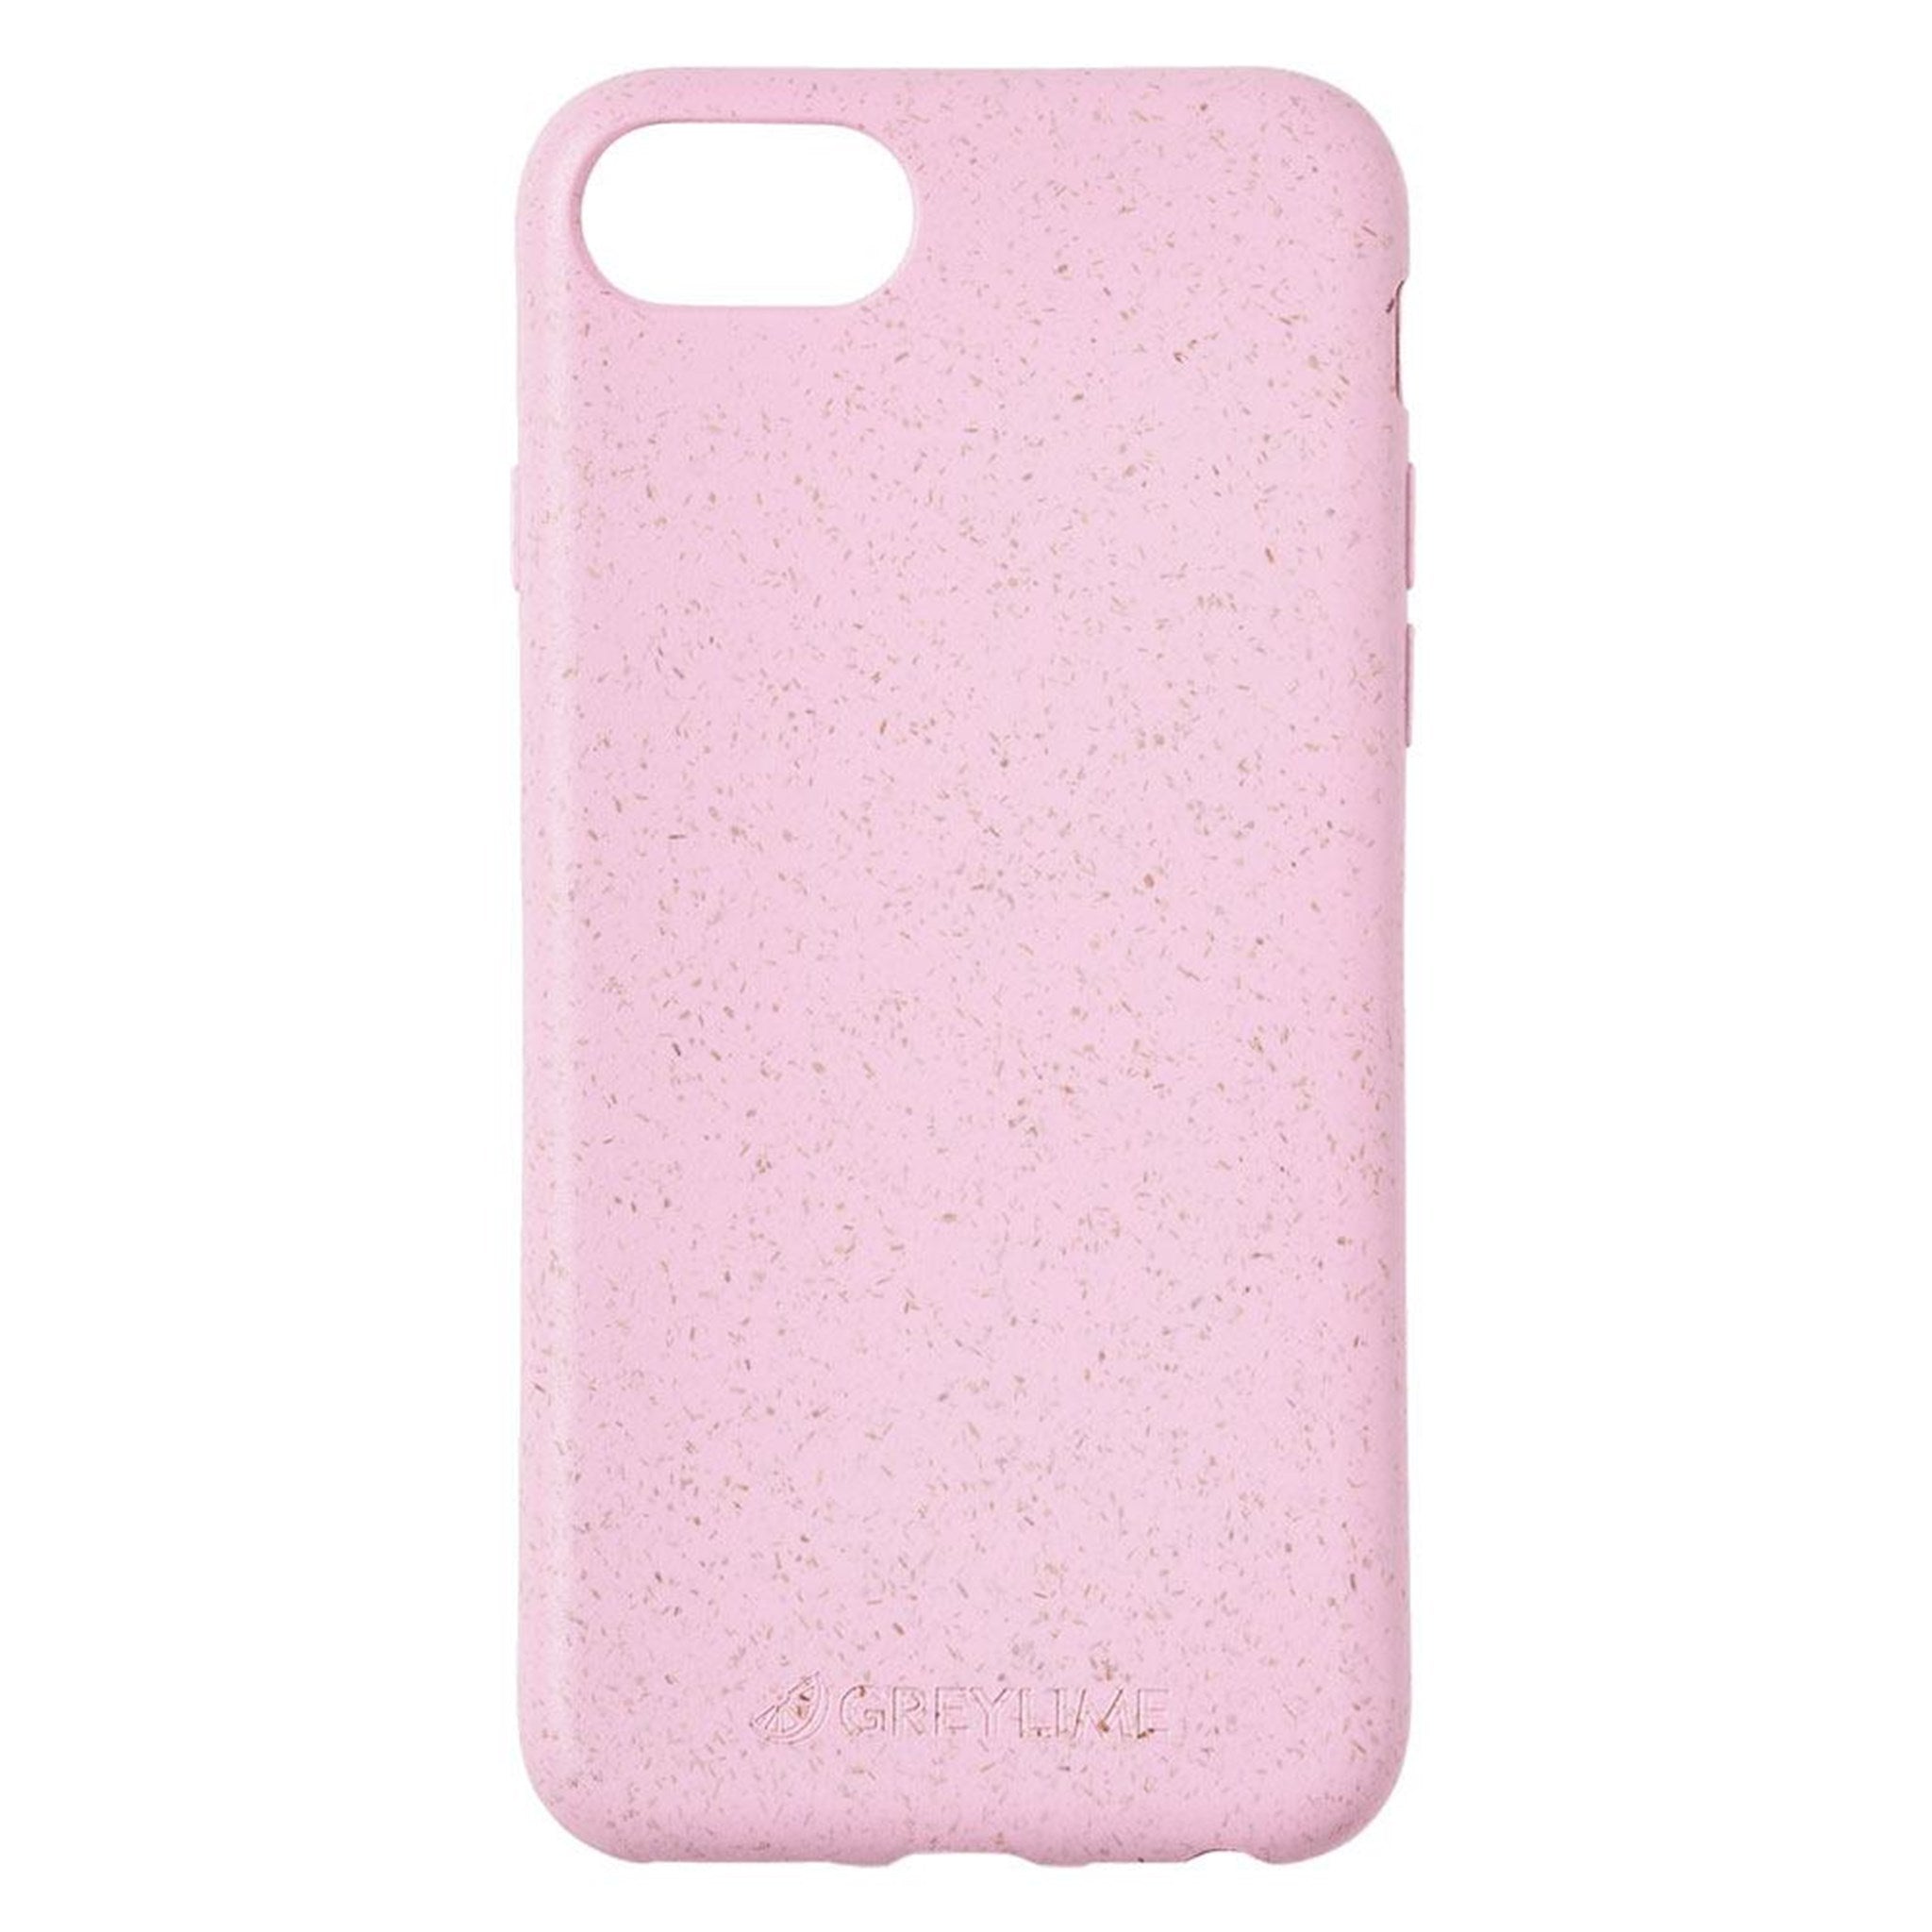 GreyLime-iPhone-6-7-8-SE-biodegradable-cover-Pink-COIP67805-V4.jpg